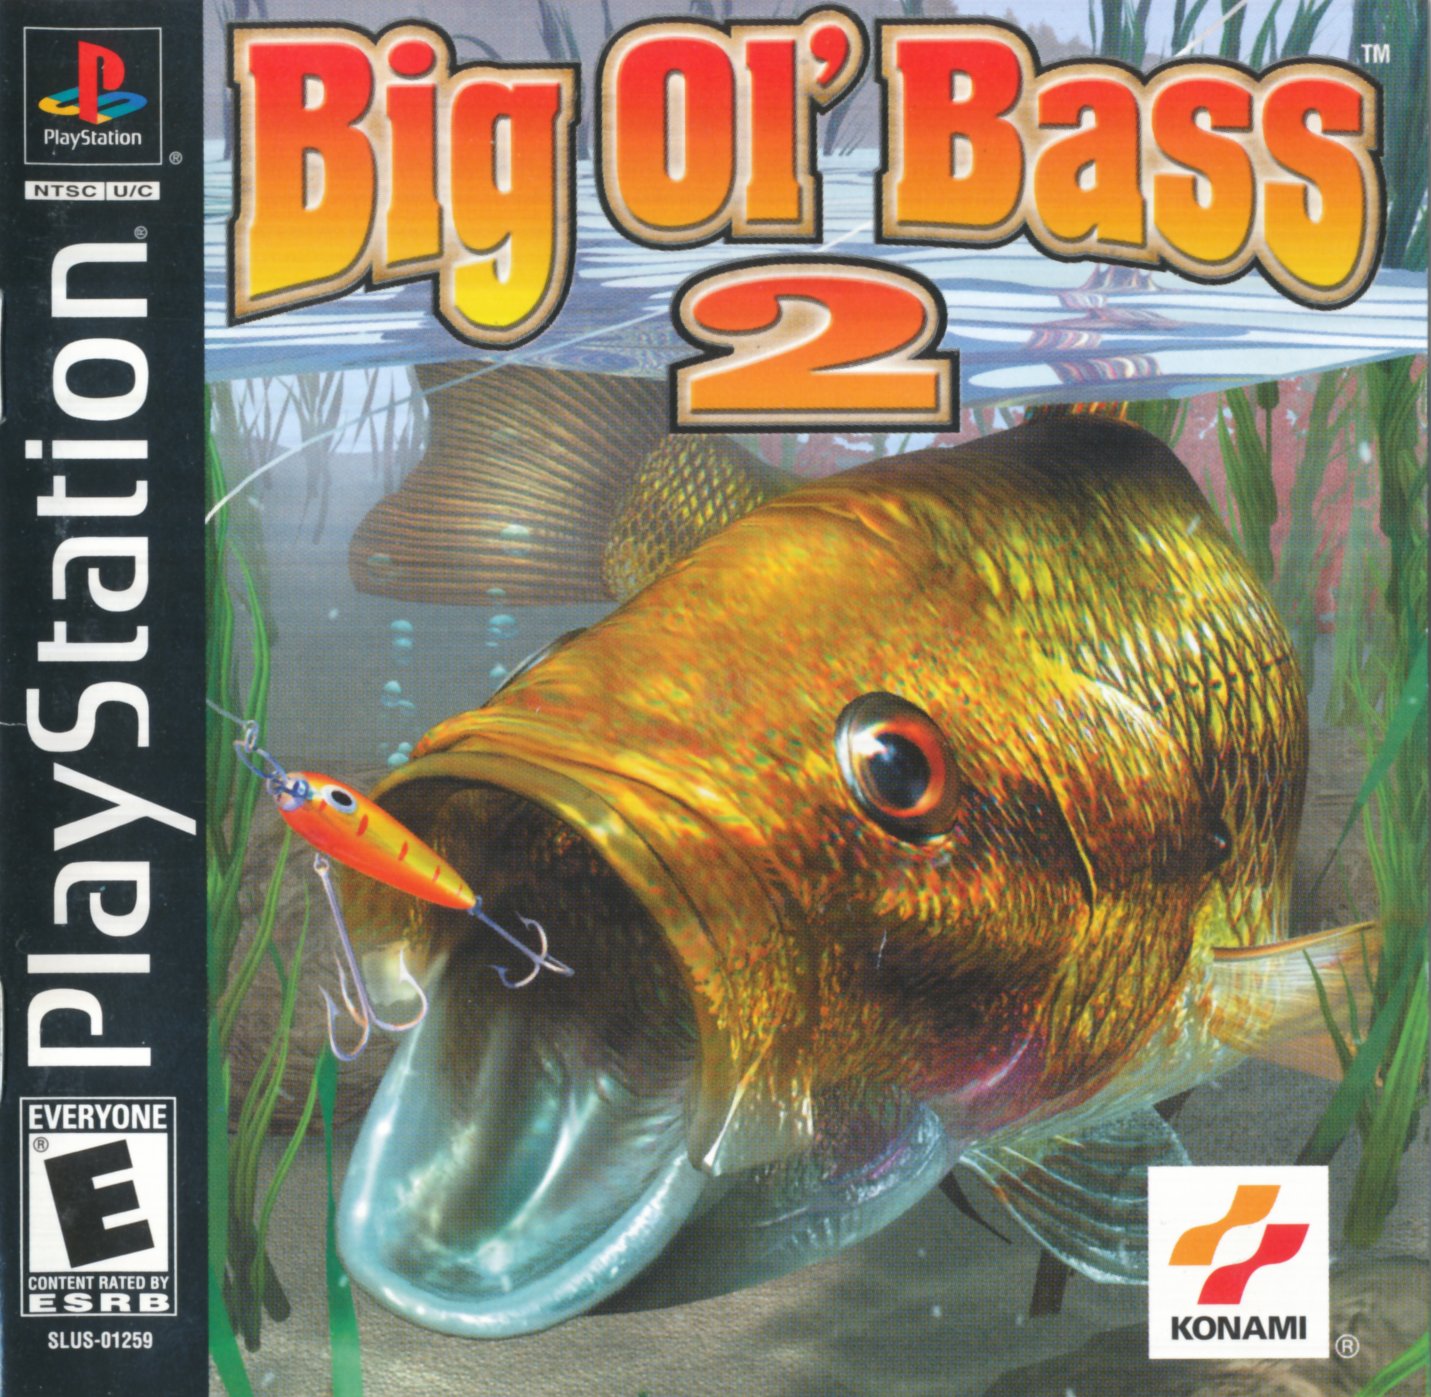 Басс 2 1 2. Fisherman's Bait 2: big ol' Bass. Fisherman's Bait 2 big ol Bass ps1 обложка. Big ol Bass 2 ps1. Fisherman's Bait - big ol' Bass 2 USA.